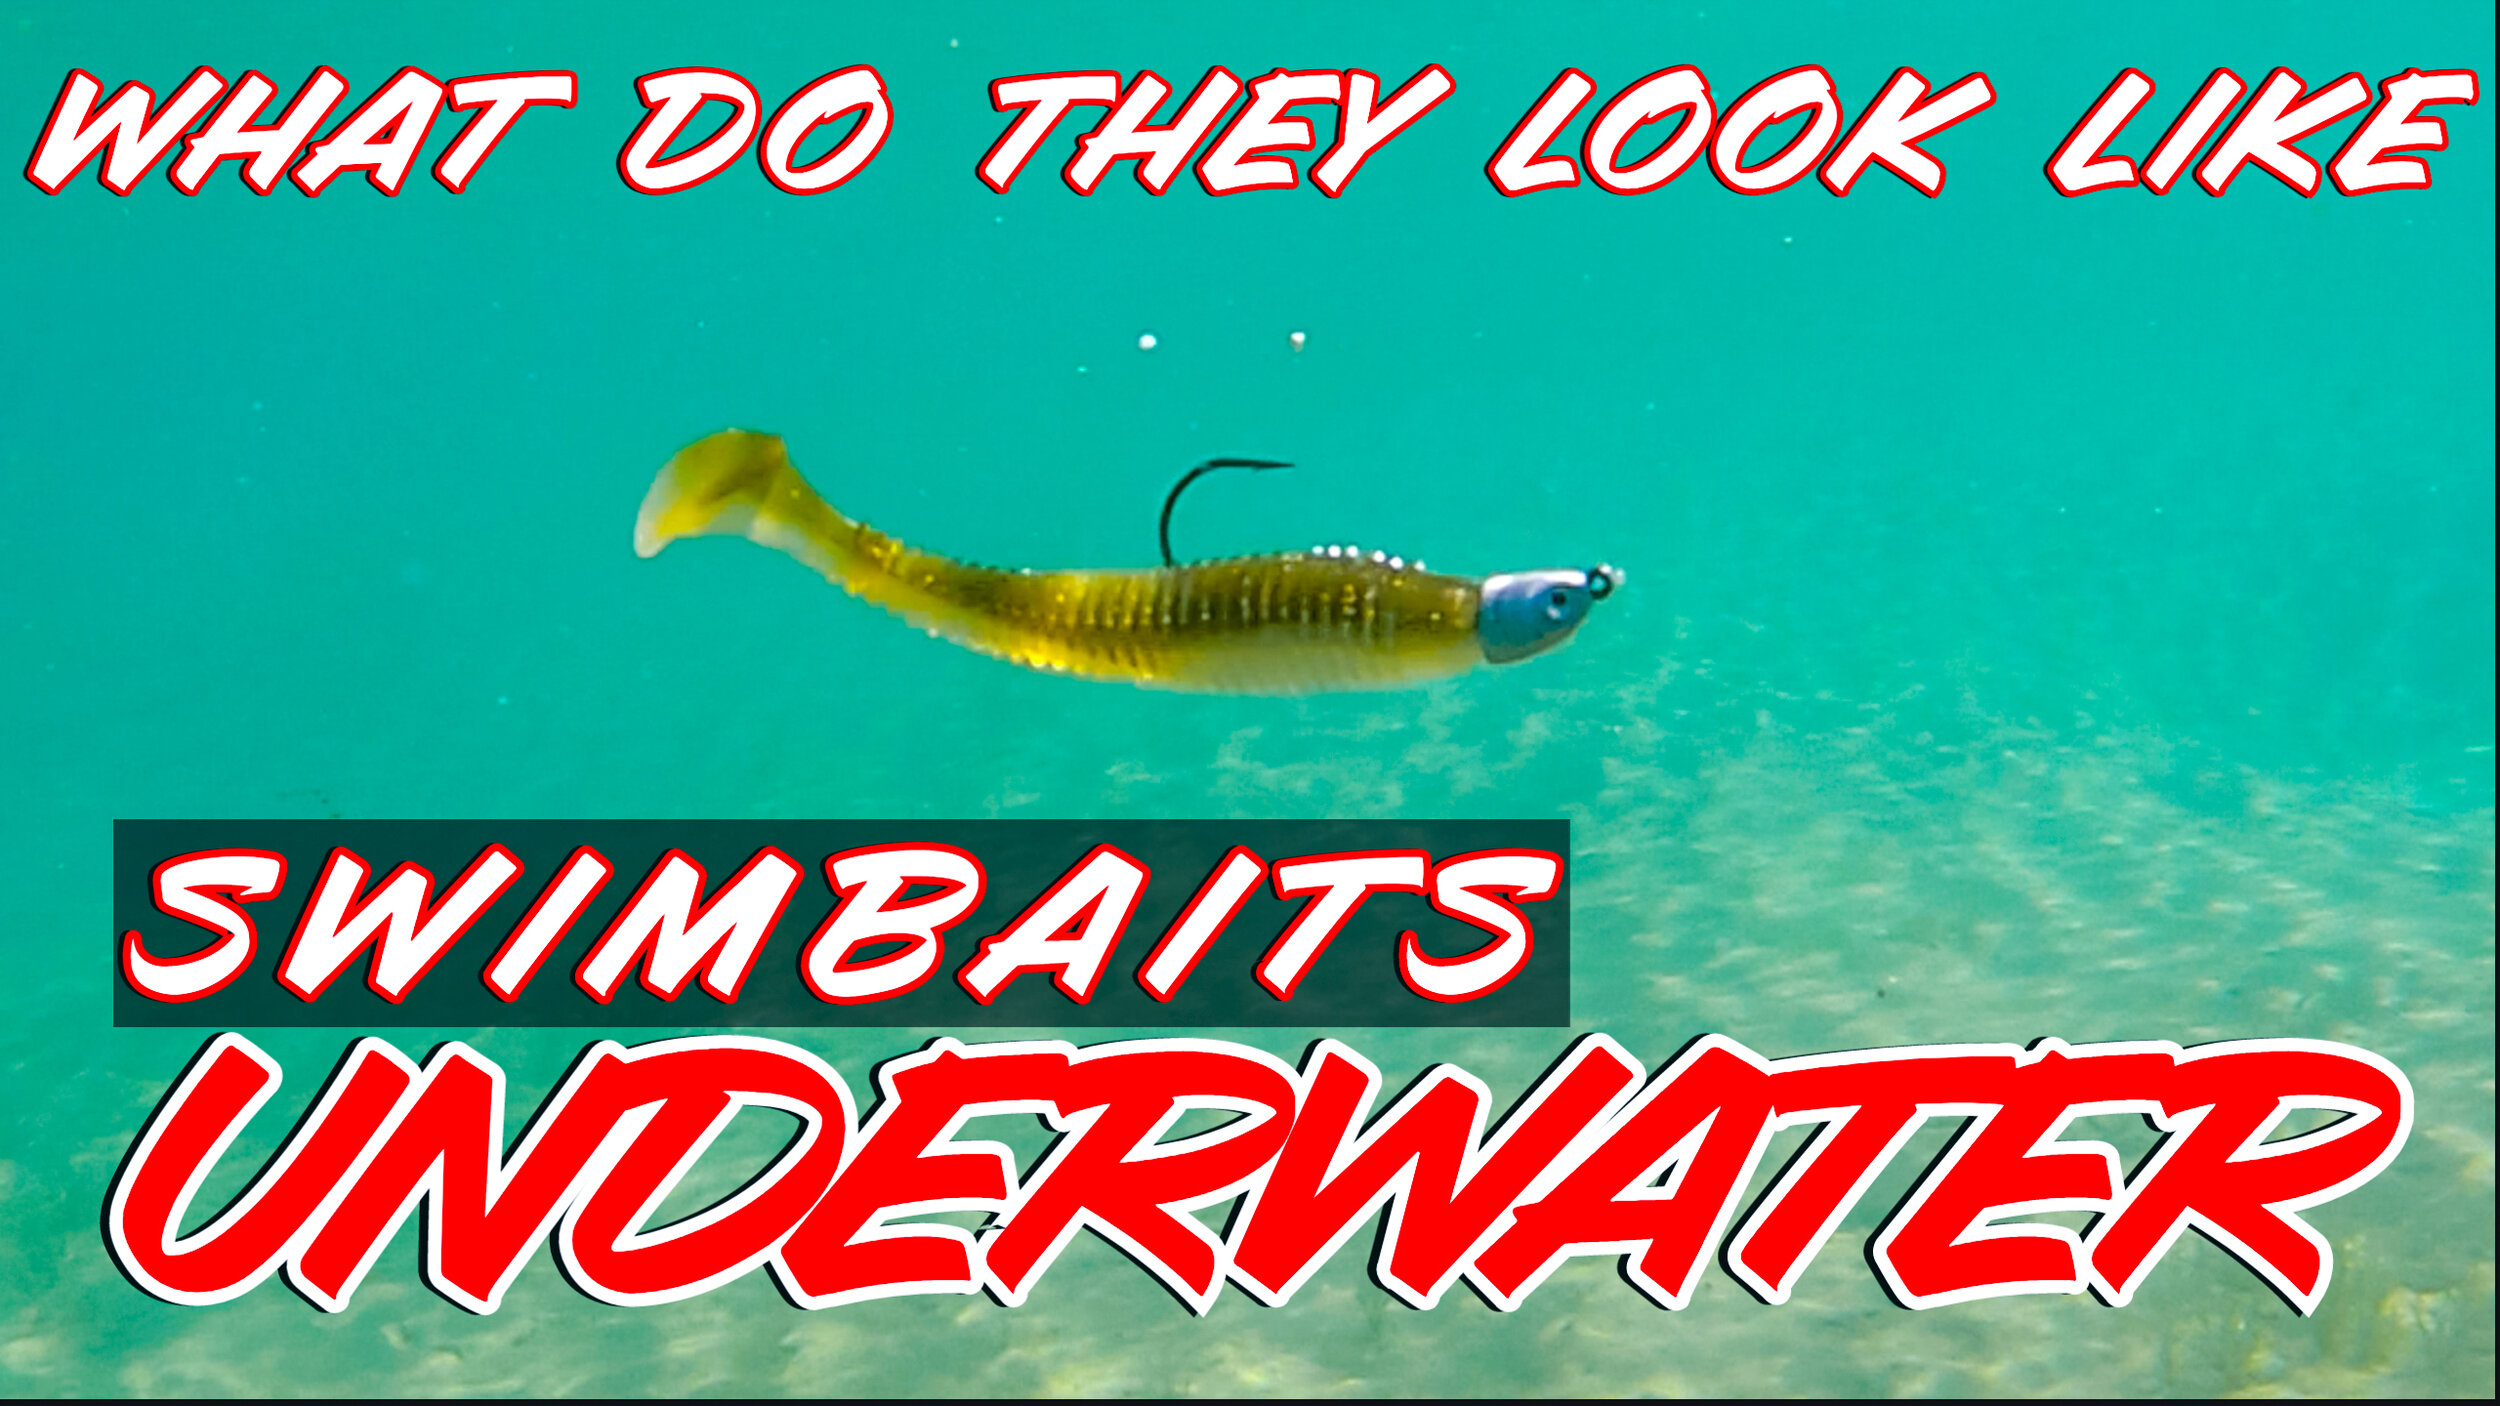 Underwater Swimbait Footage! Best Swimbaits And Paddletails